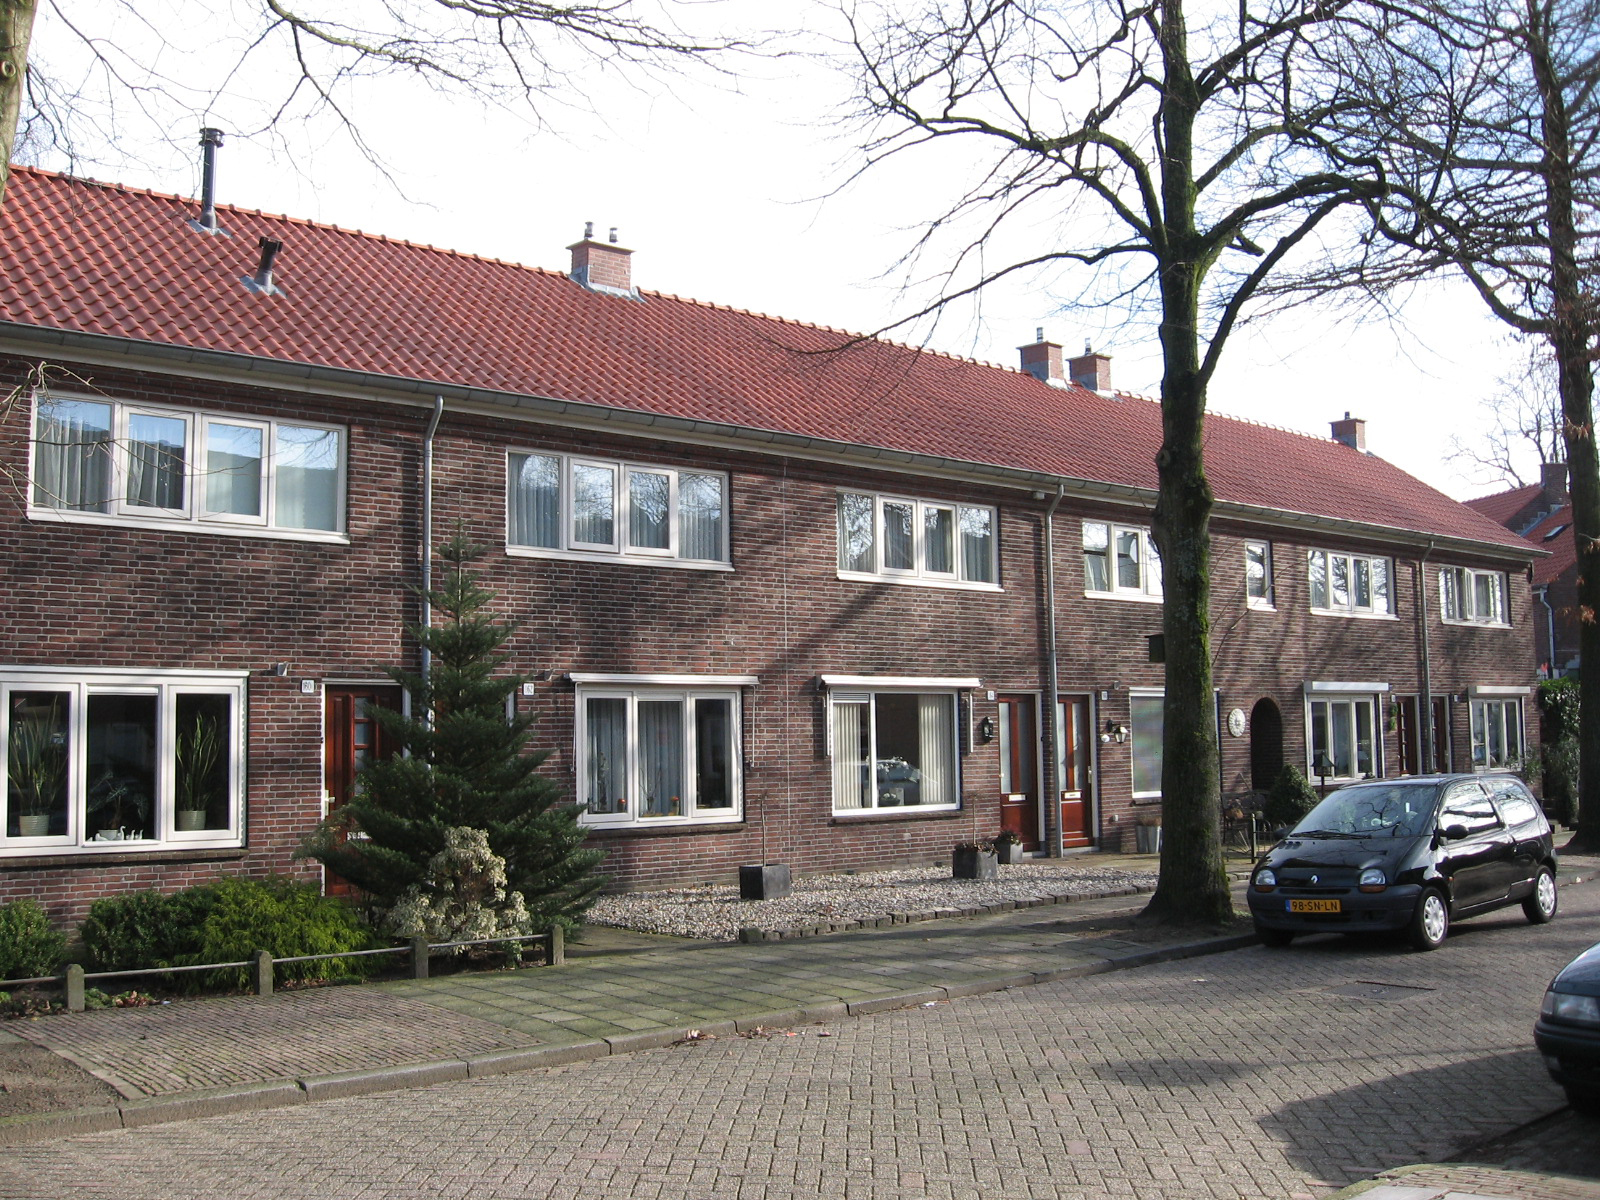 Christoffelstraat 9, 7601 GC Almelo, Nederland